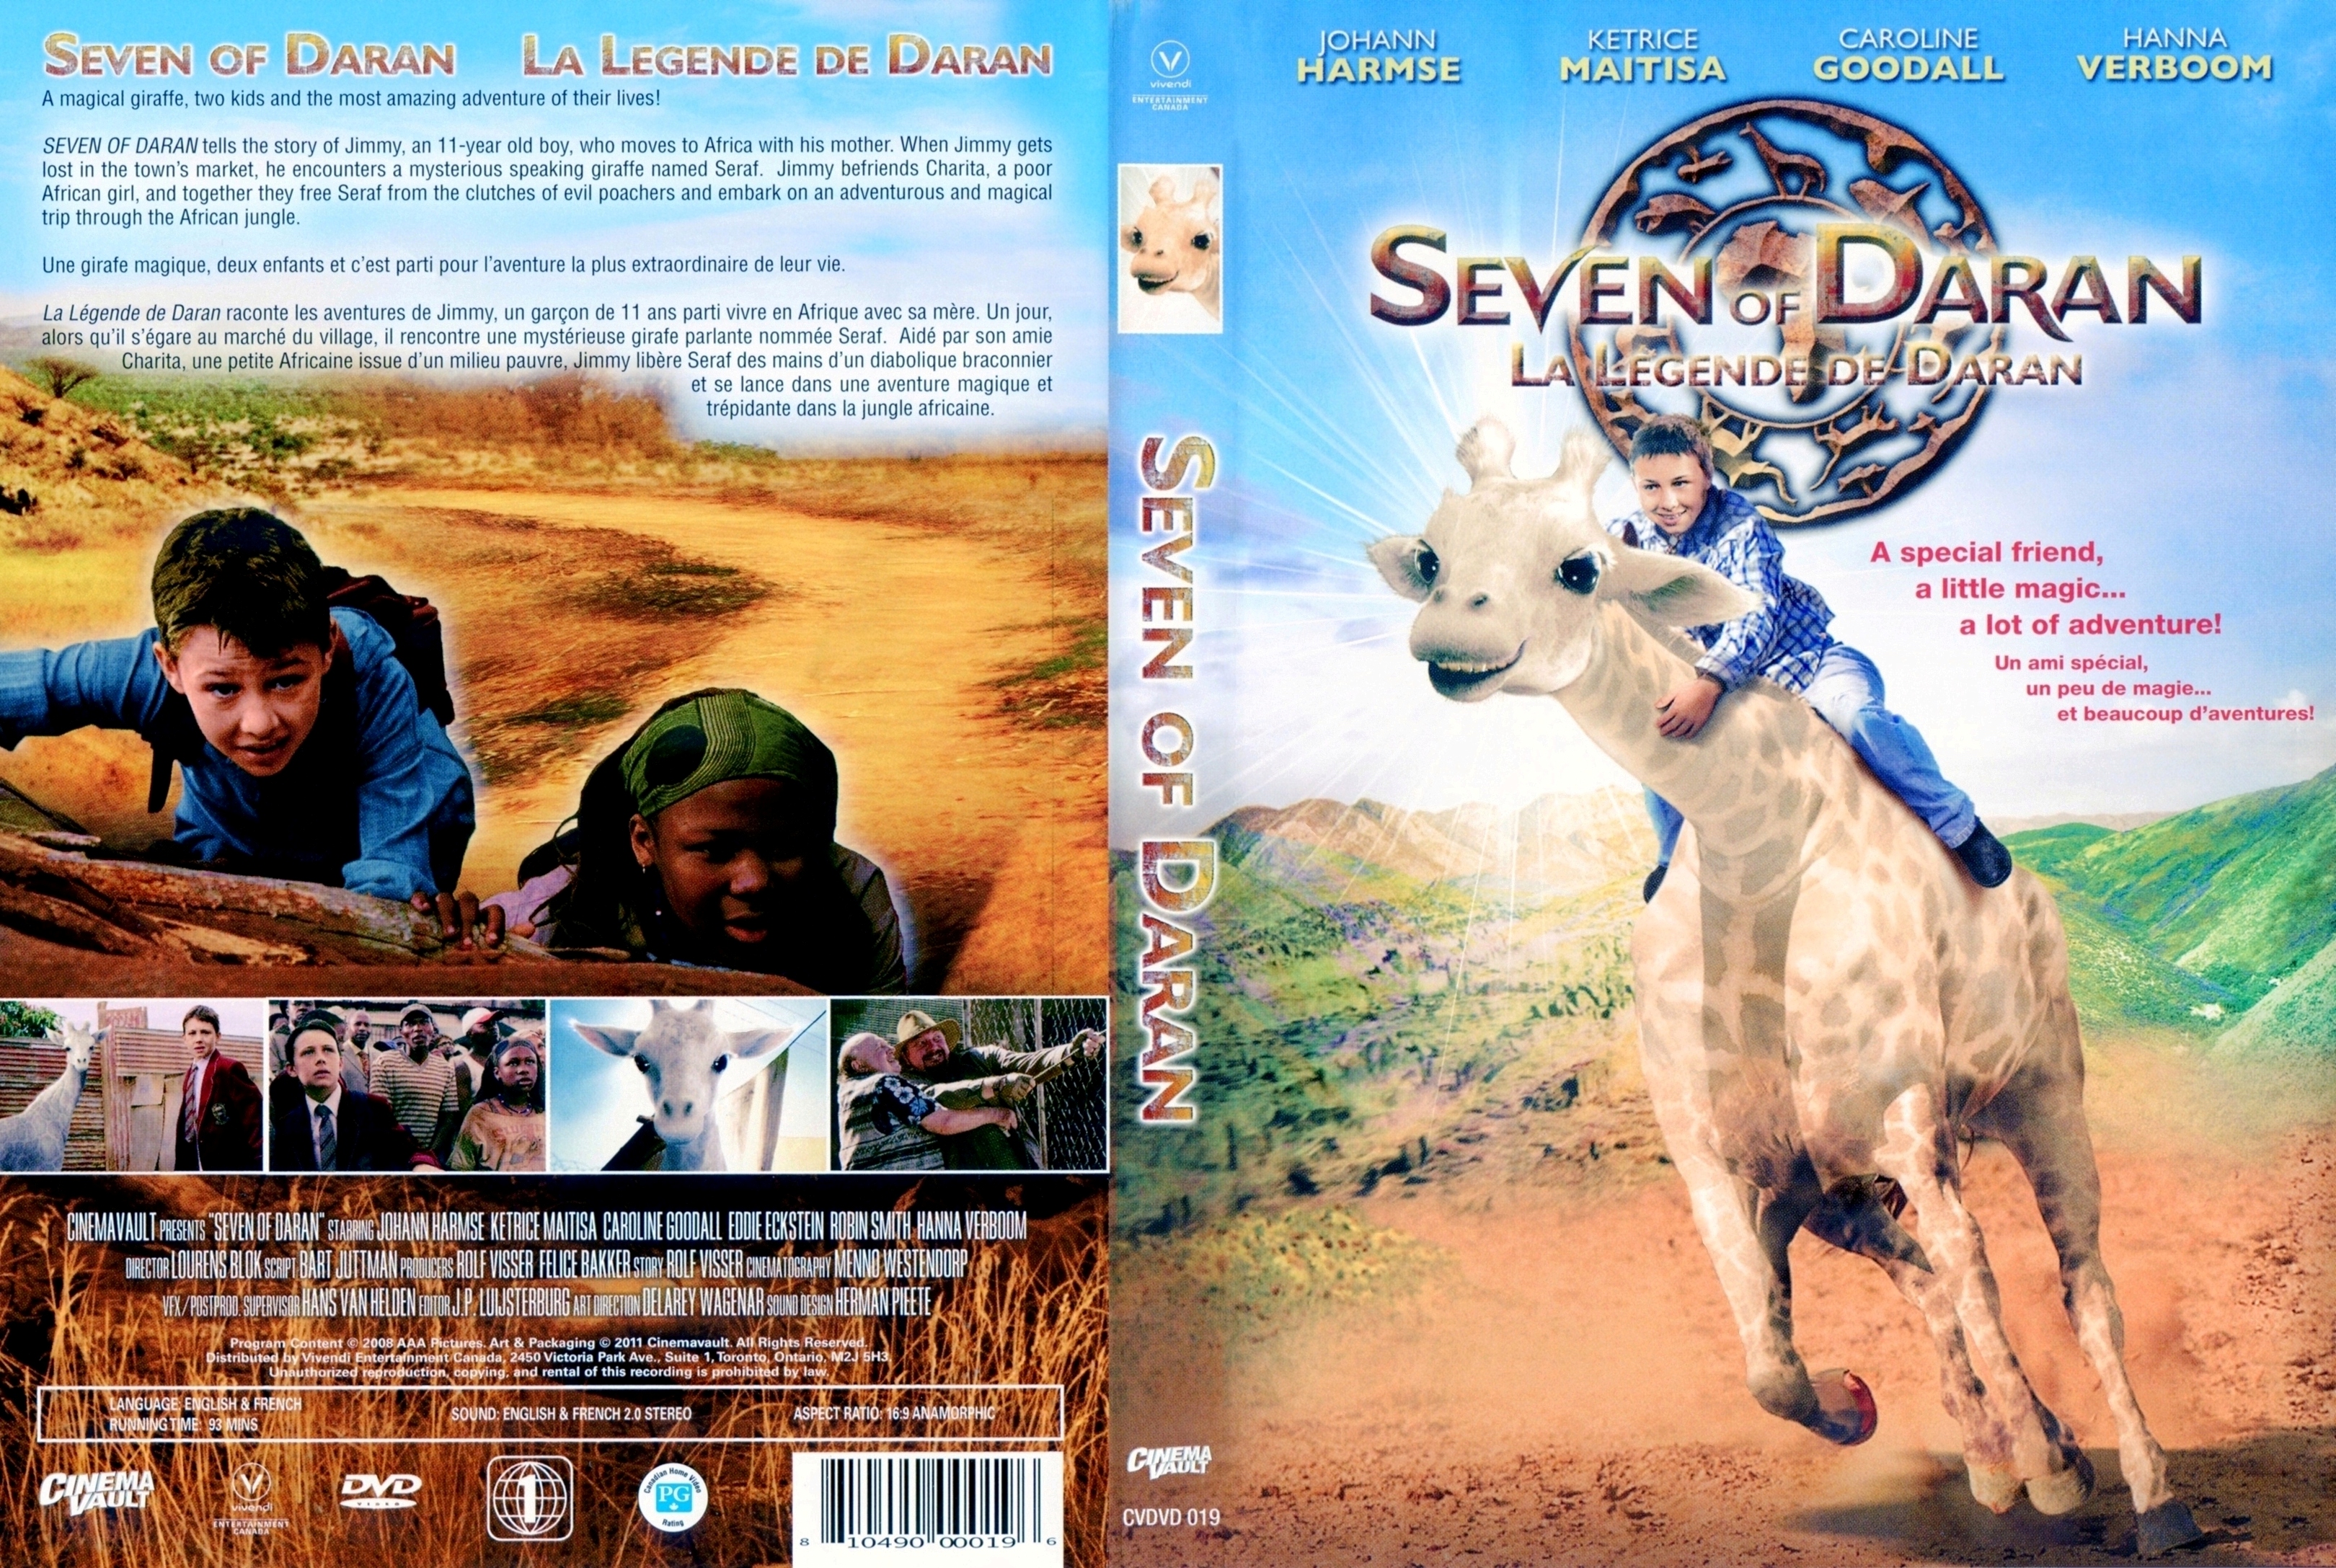 Jaquette DVD La lgende de Daran - Seven of daran (Canadienne)